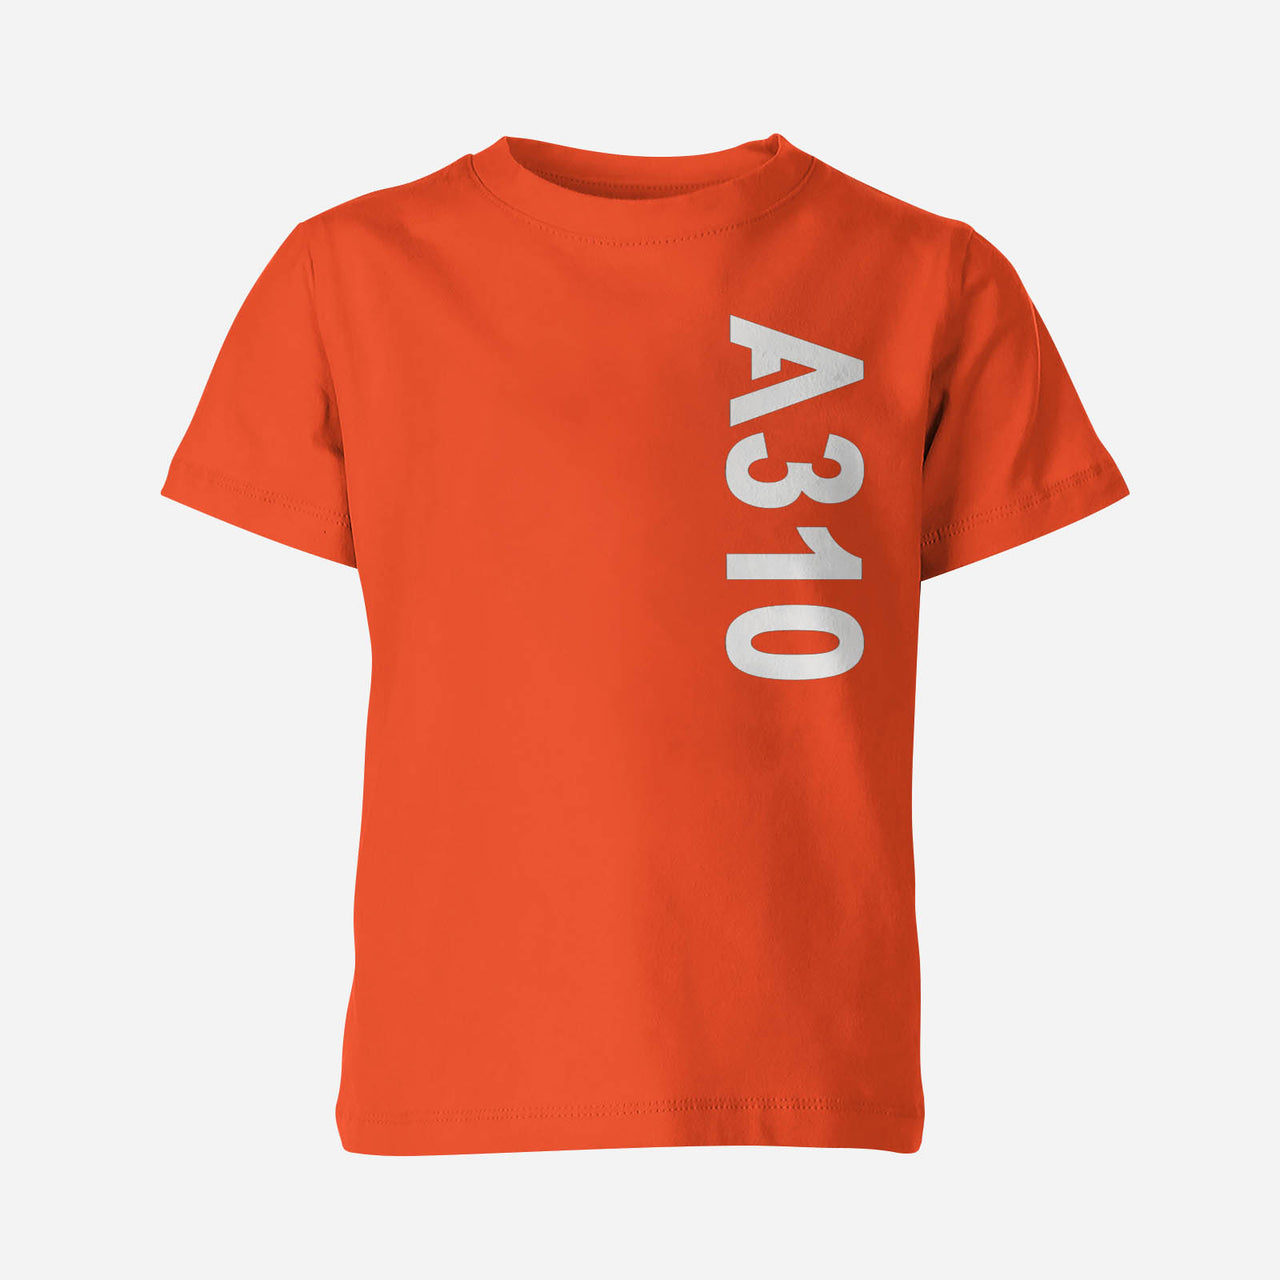 A310 Side Text Designed Children T-Shirts